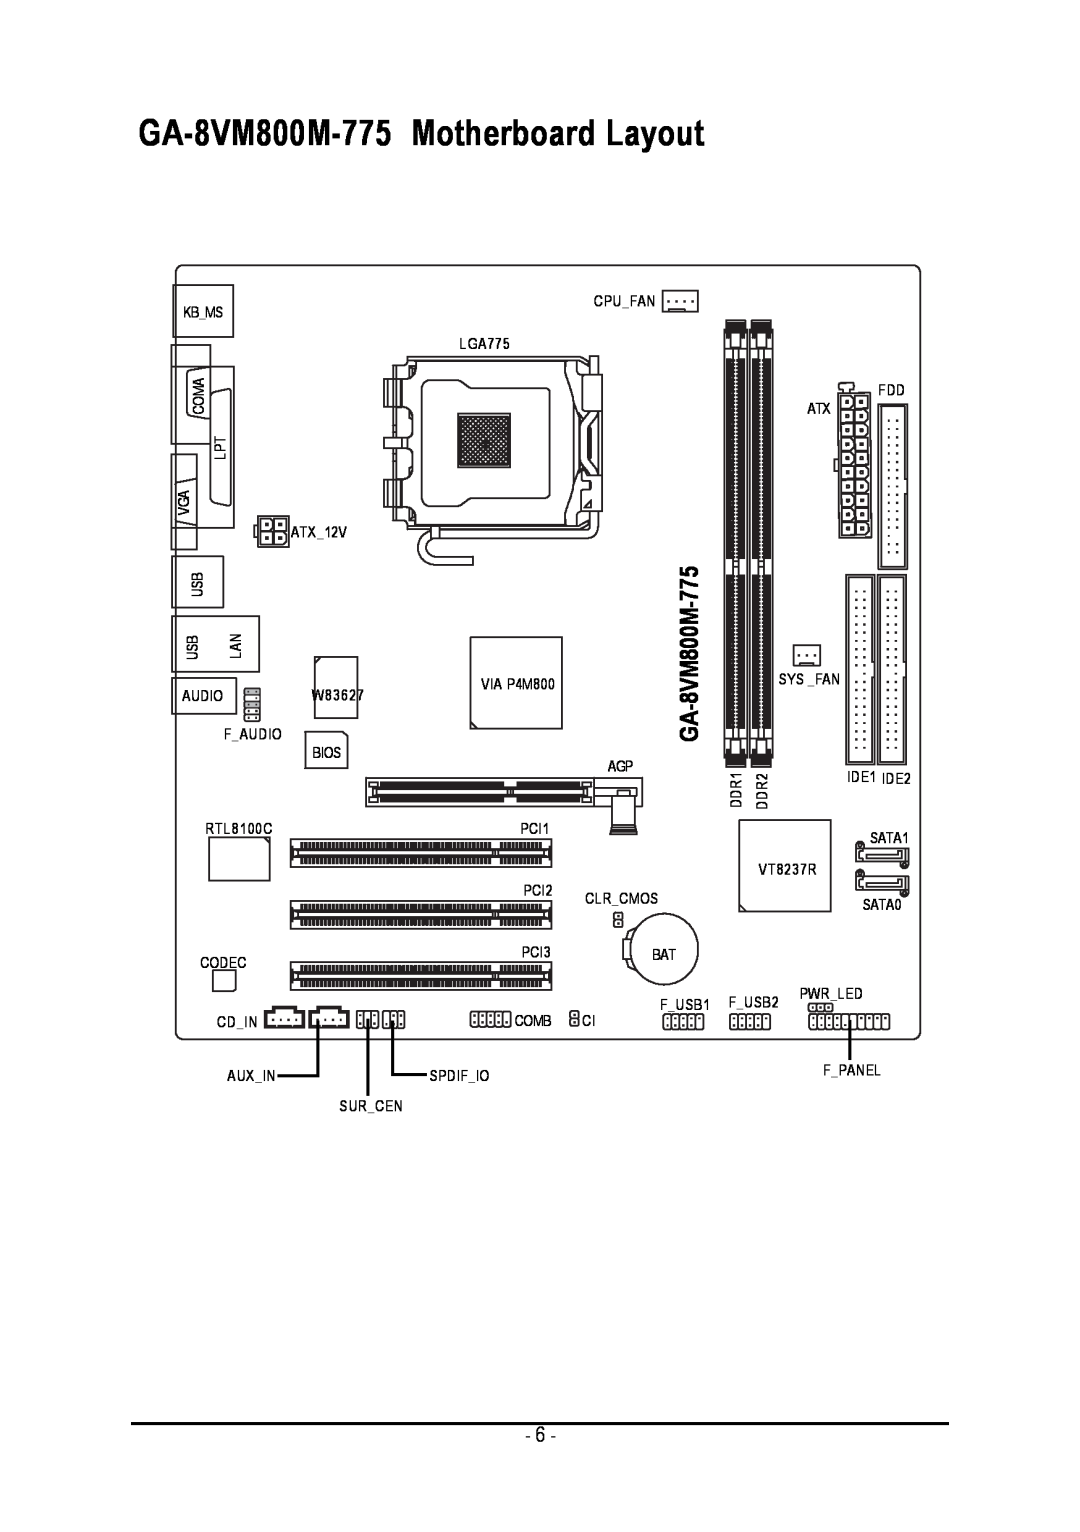 Gigabyte user manual GA-8VM800M-775 Motherboard Layout, VIA P4M800775-8VM800M -GA 